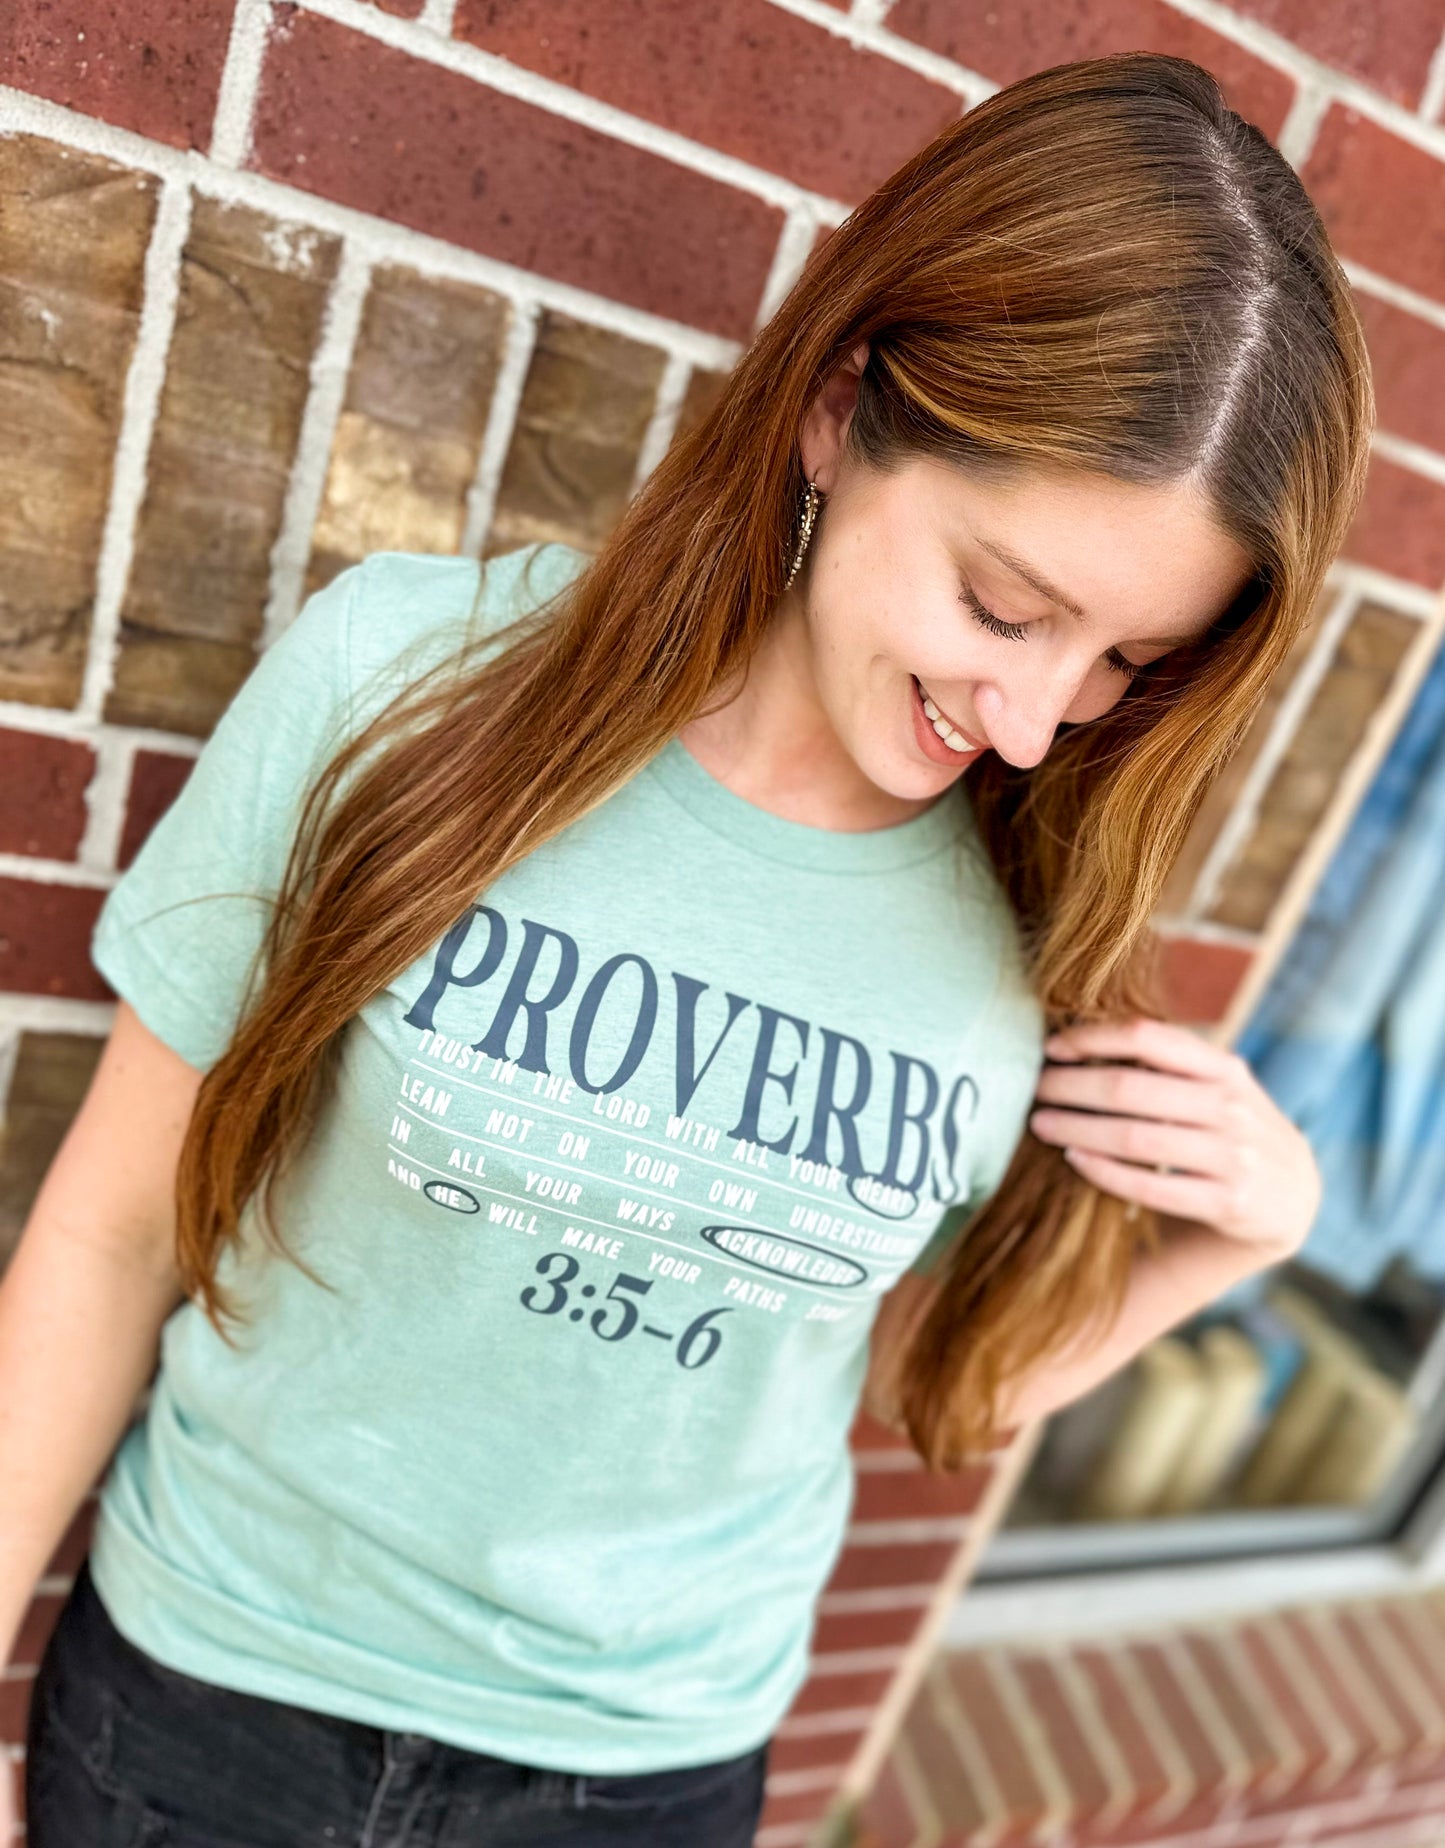 Proverbs shirt